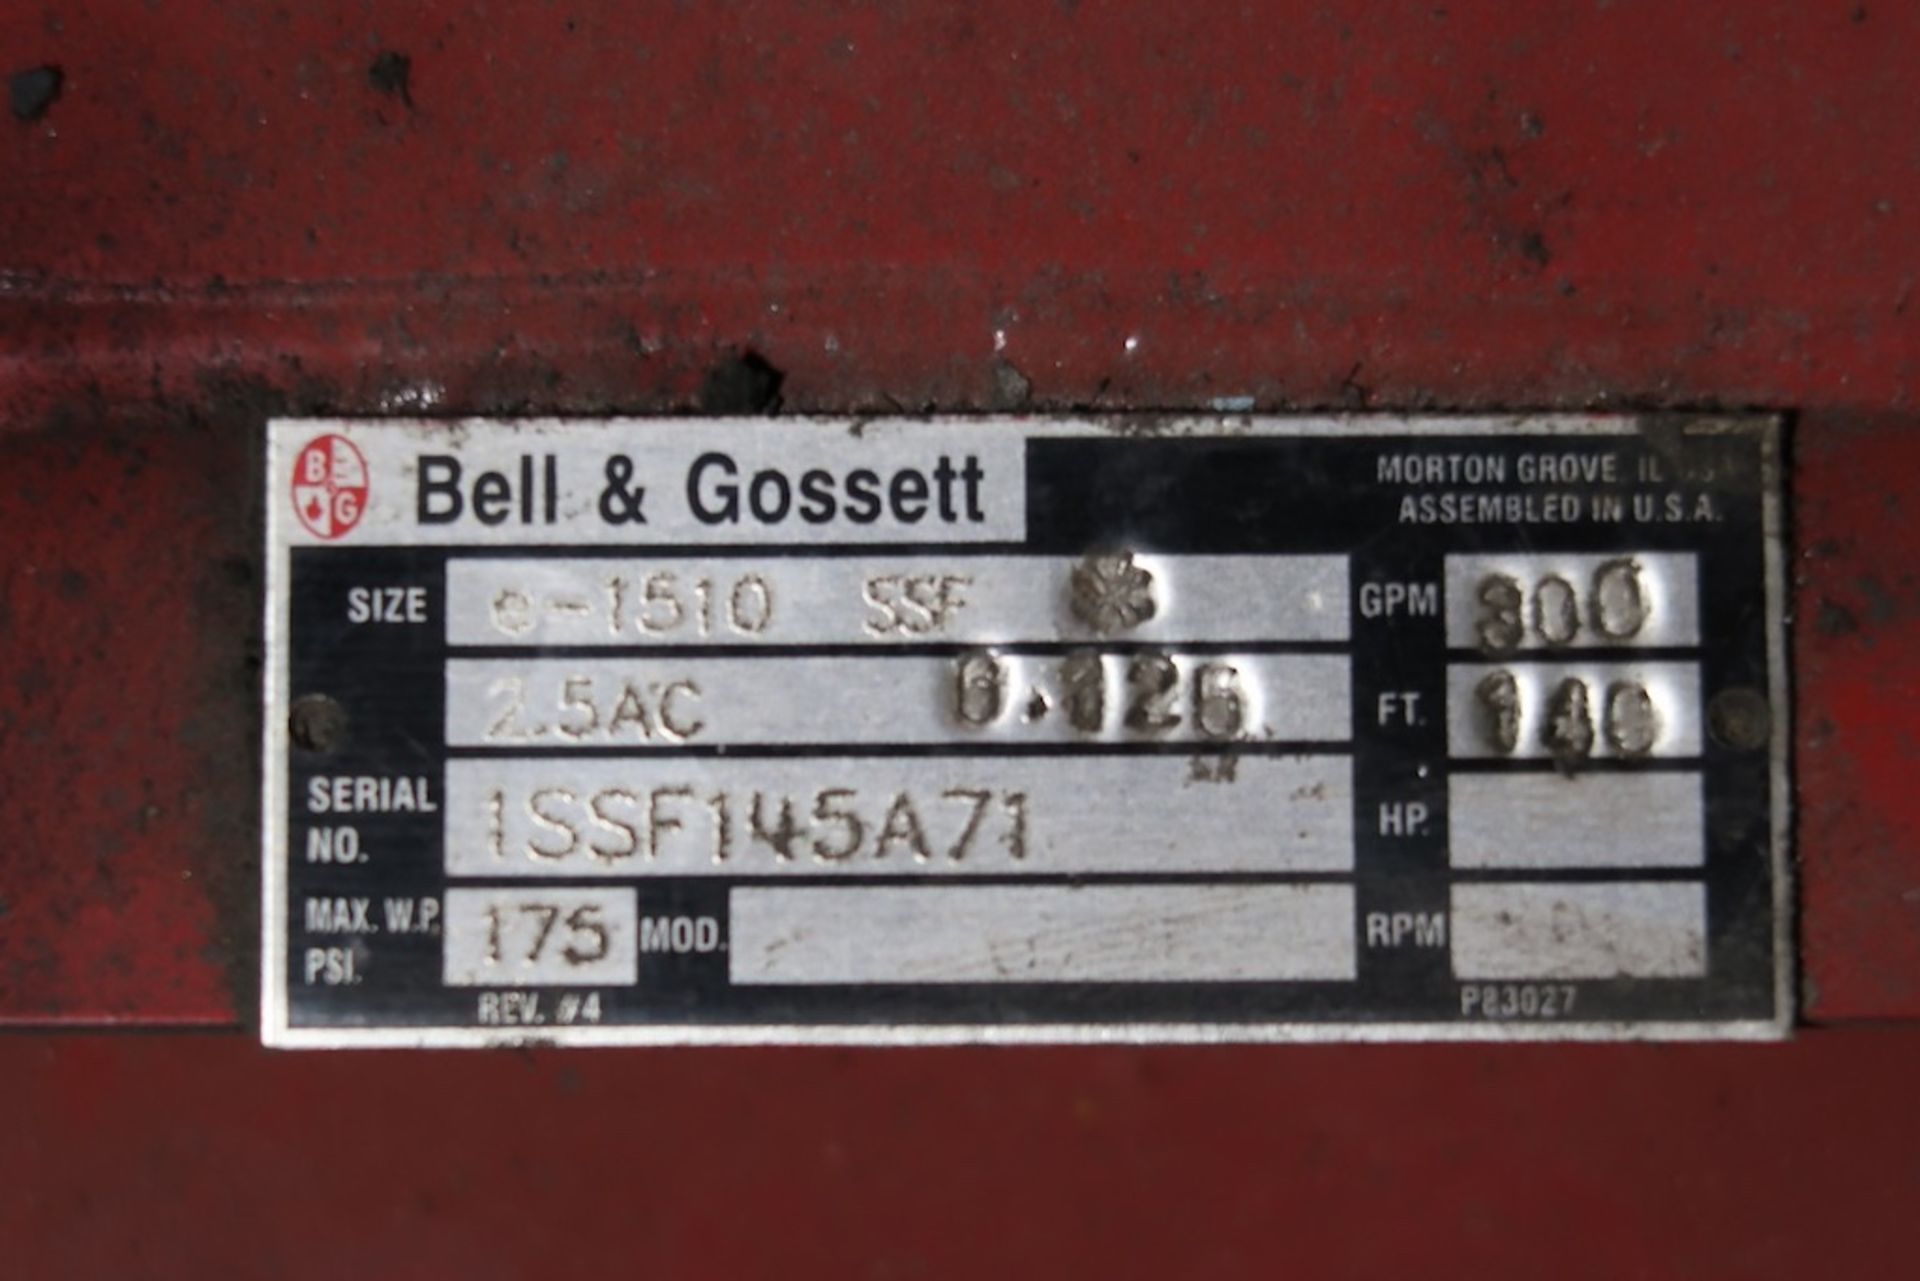 Bell & Gossett 15HP Centrifugal Pump - Image 3 of 3